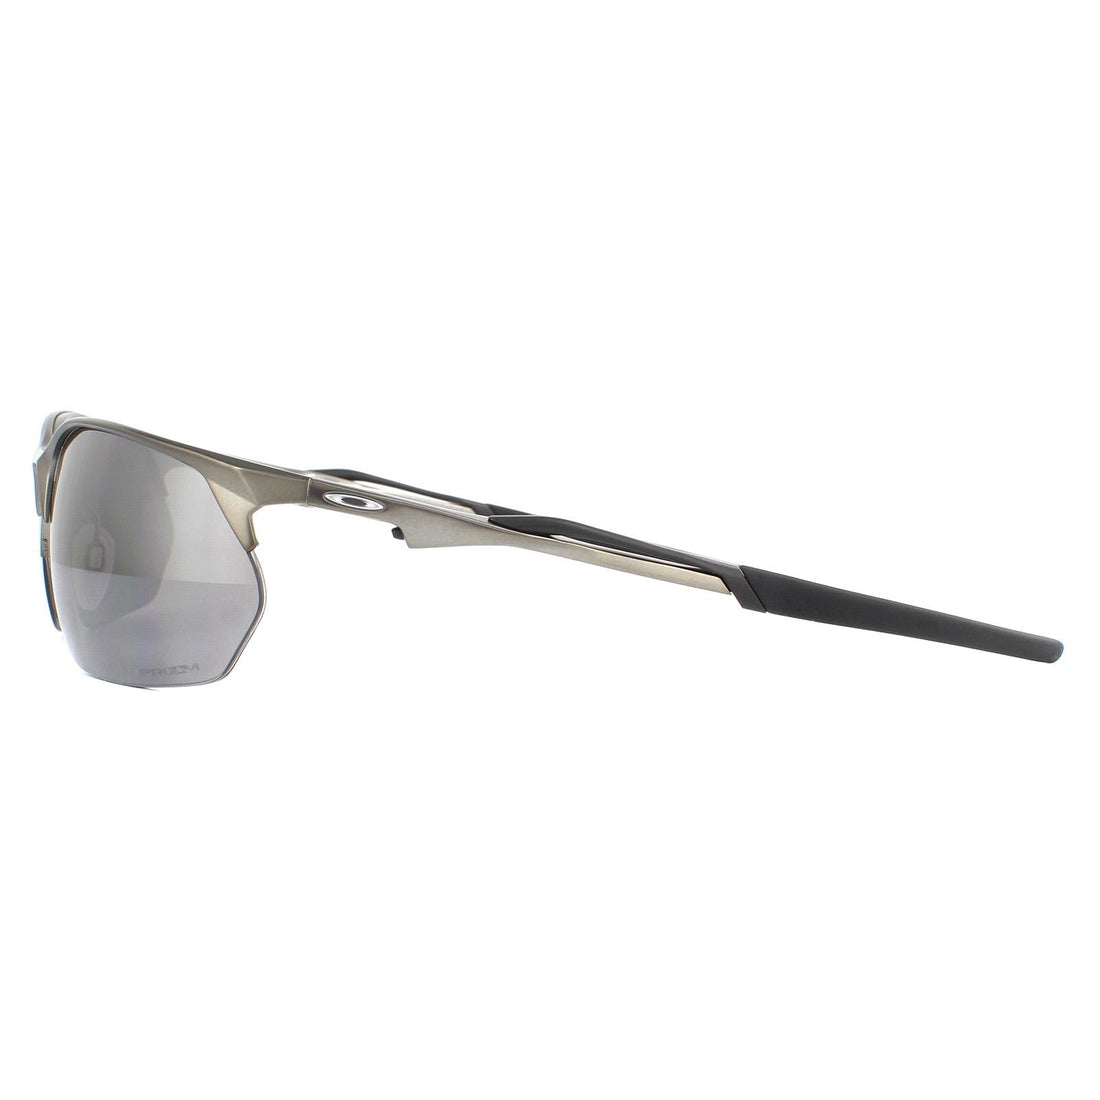 Oakley Sunglasses Wire Tap 2.0 OO4145-02 Matte Gunmetal Prizm Black